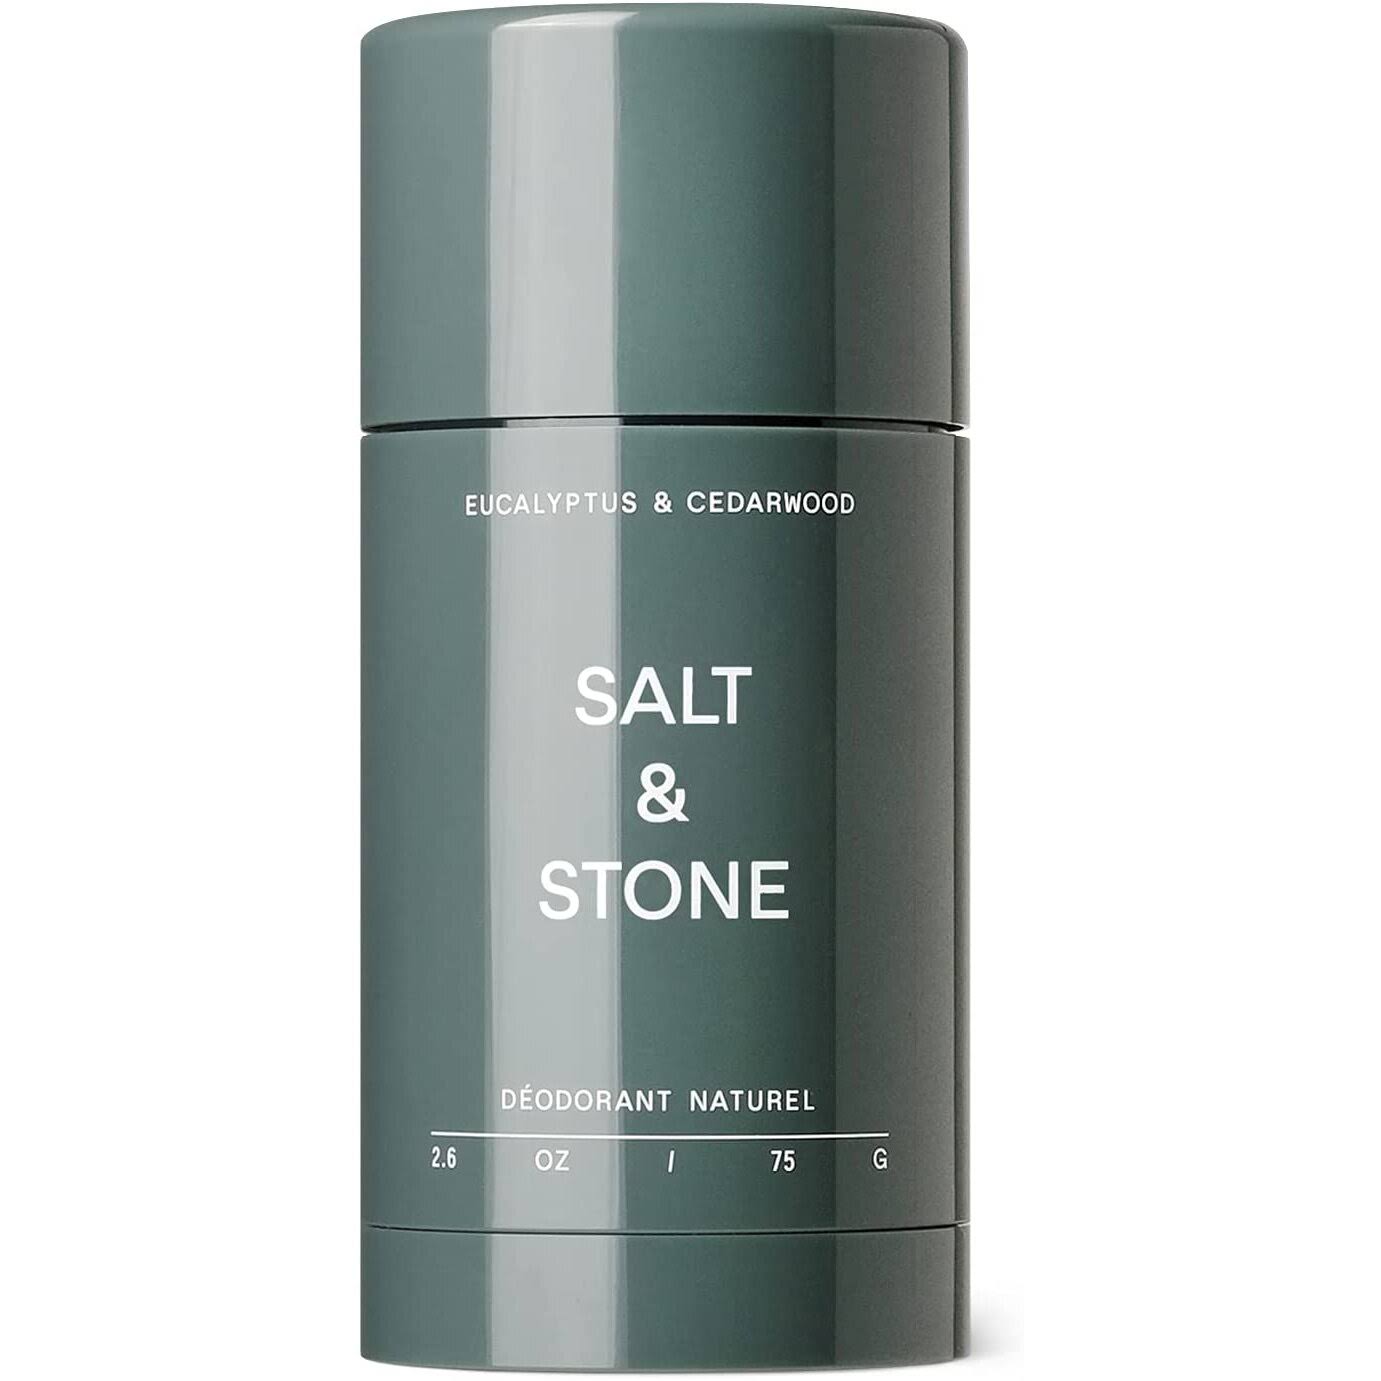 Salt & Stone Eucalyptus & Cedarwood Natural Deodorant.